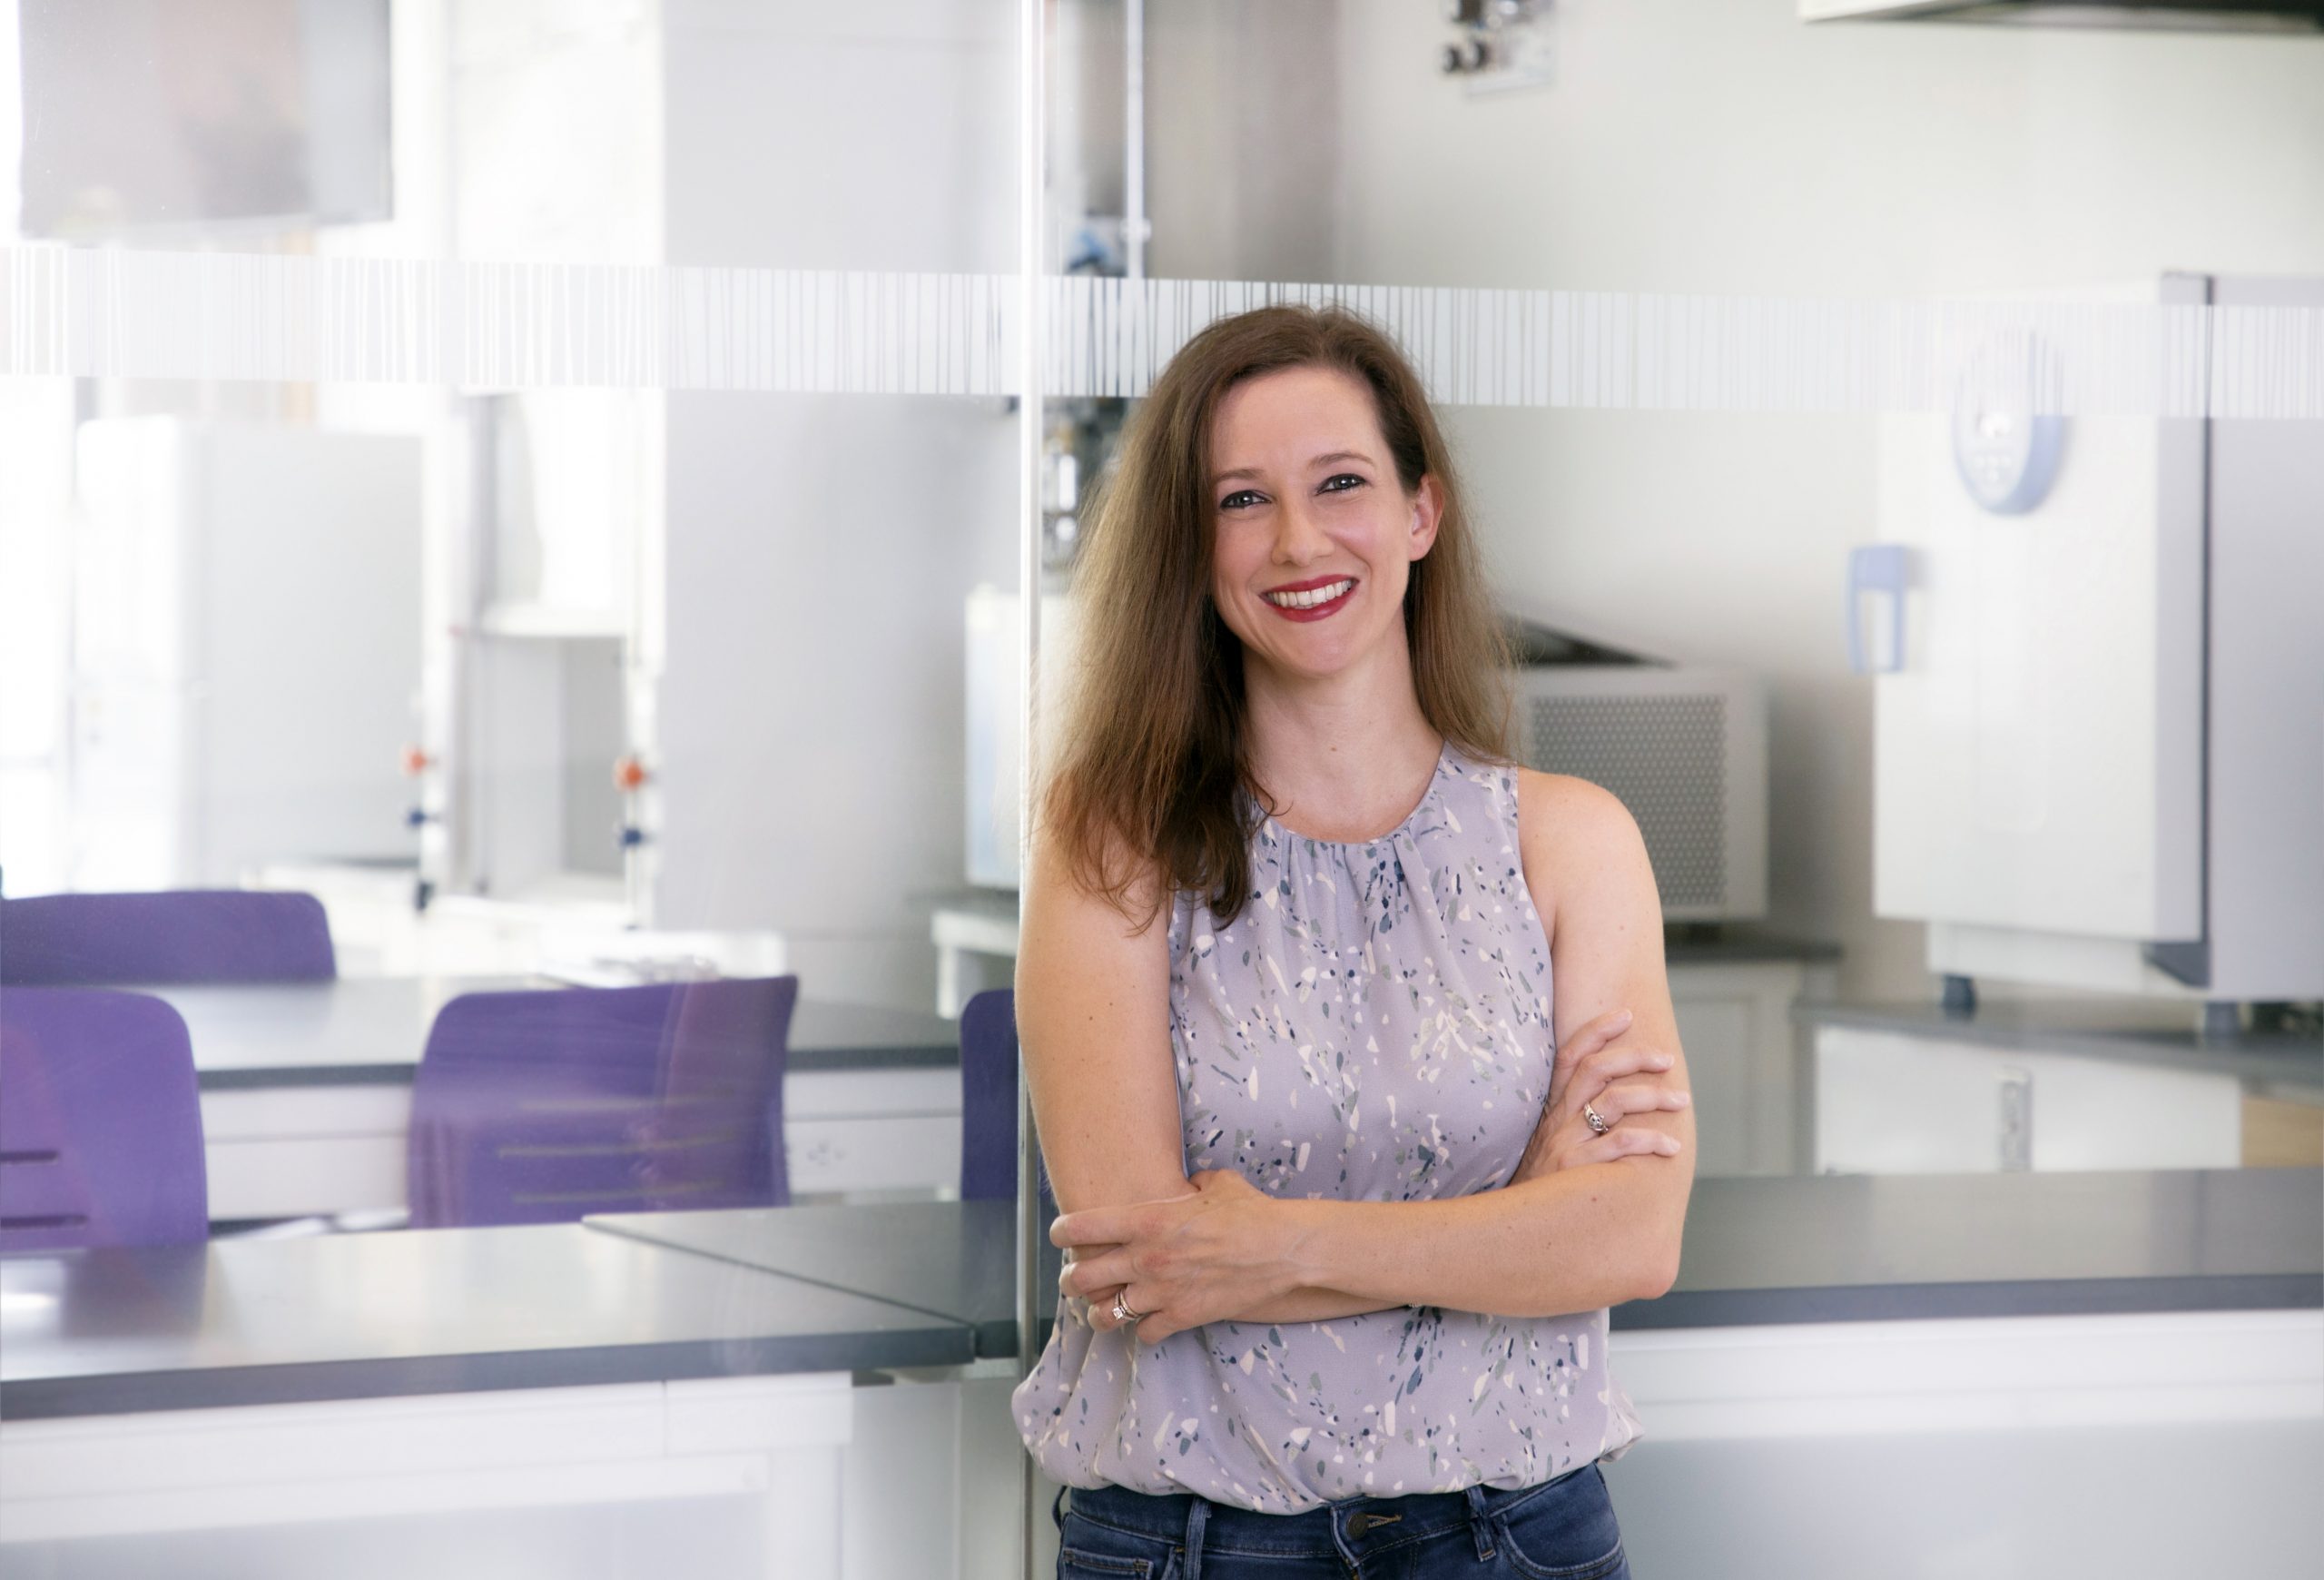 UMBC’s Tara LeGates is first runner-up for prestigious international neurobiology prize